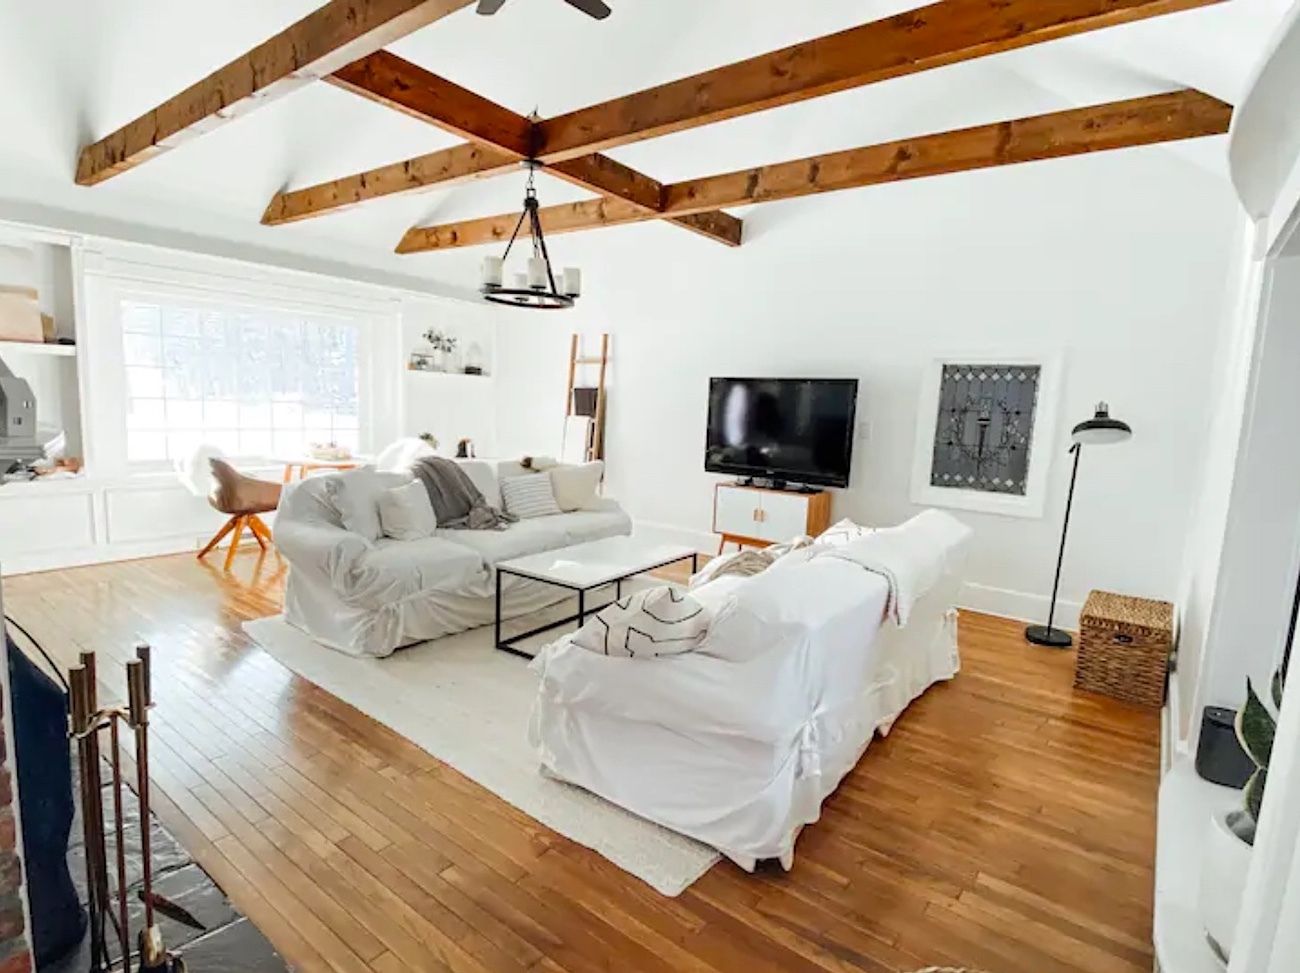 Luxurious-atelier-killington-airbnb, Killington Airbnb